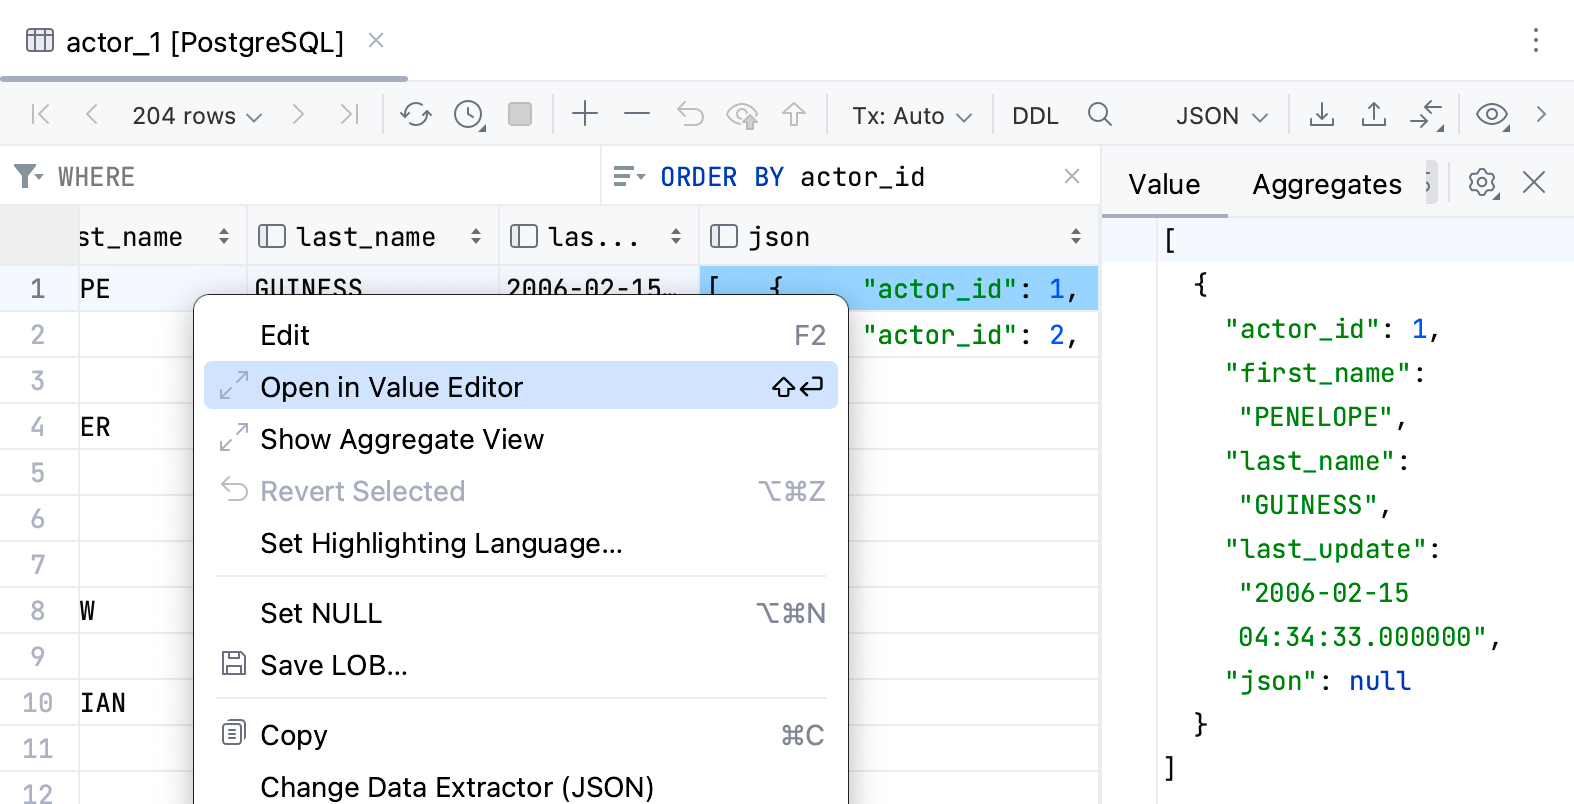 Open in Value Editor context menu option